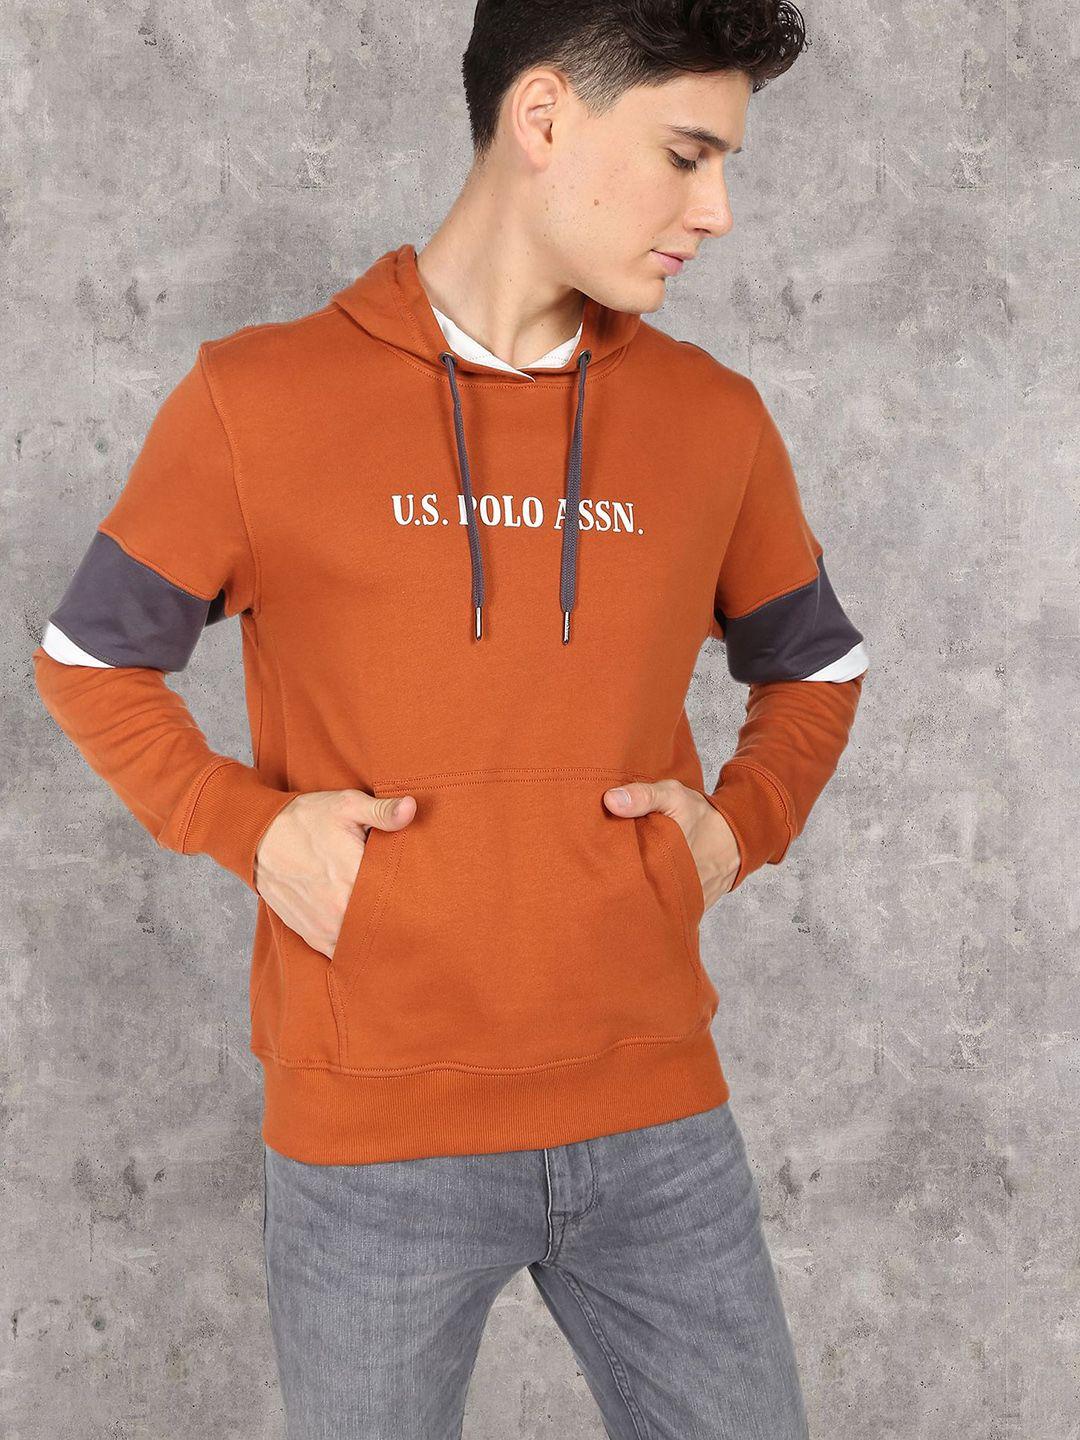 u.s. polo assn. denim co. men brown printed hooded pure cotton sweatshirt